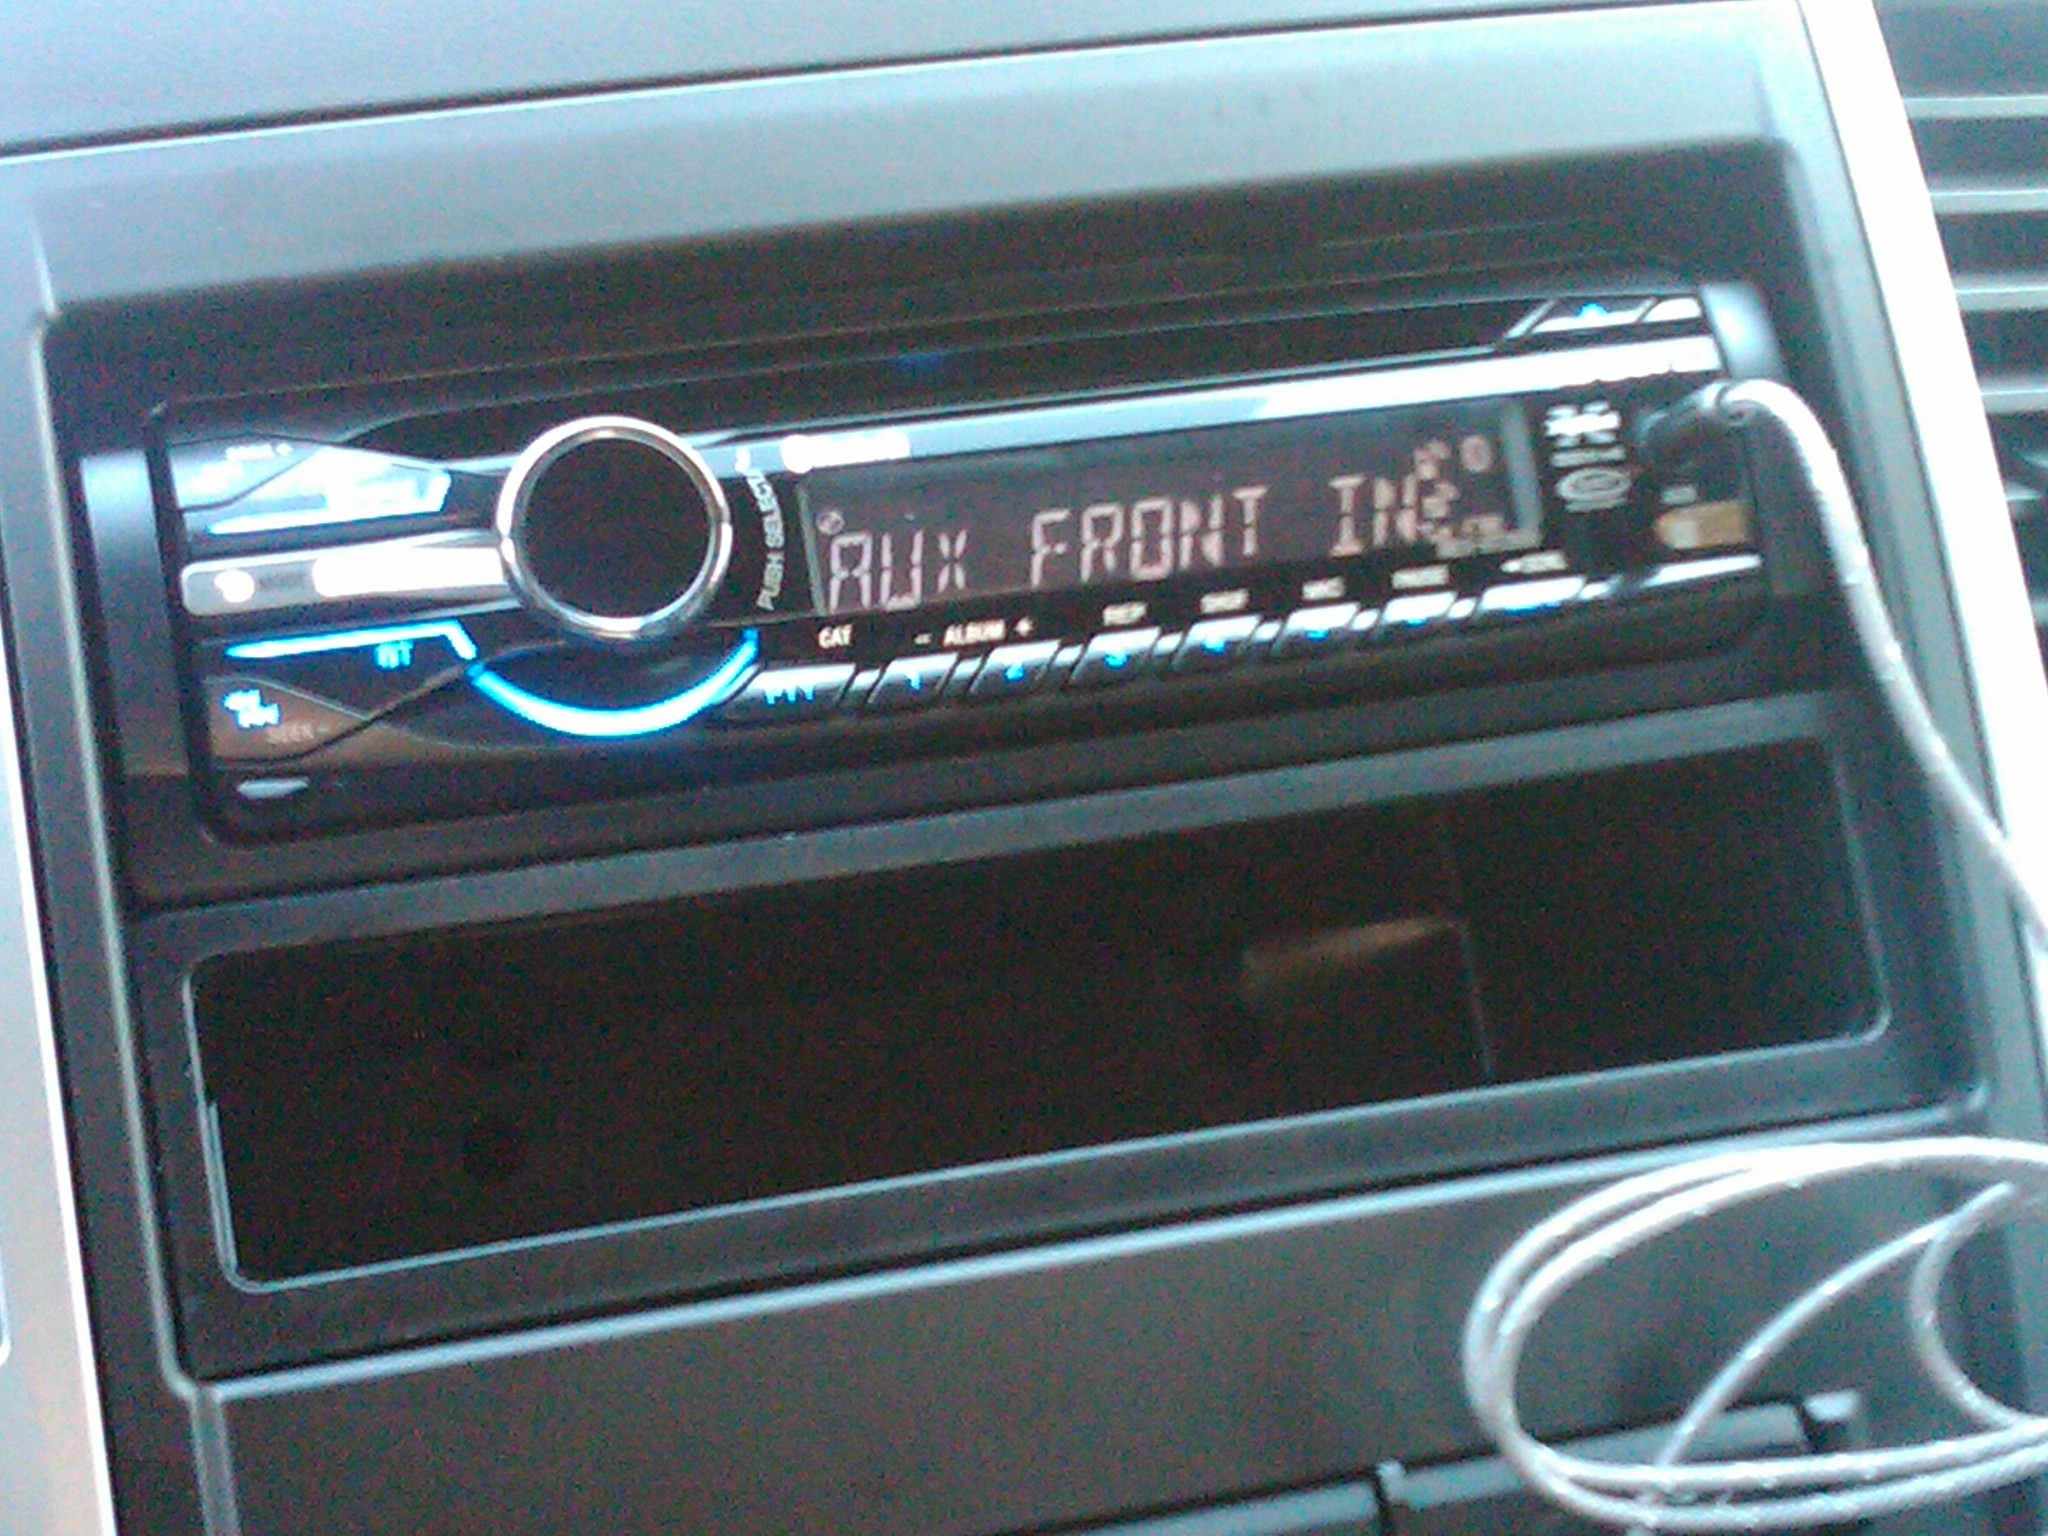 Nissan frontier auxiliary audio input jack